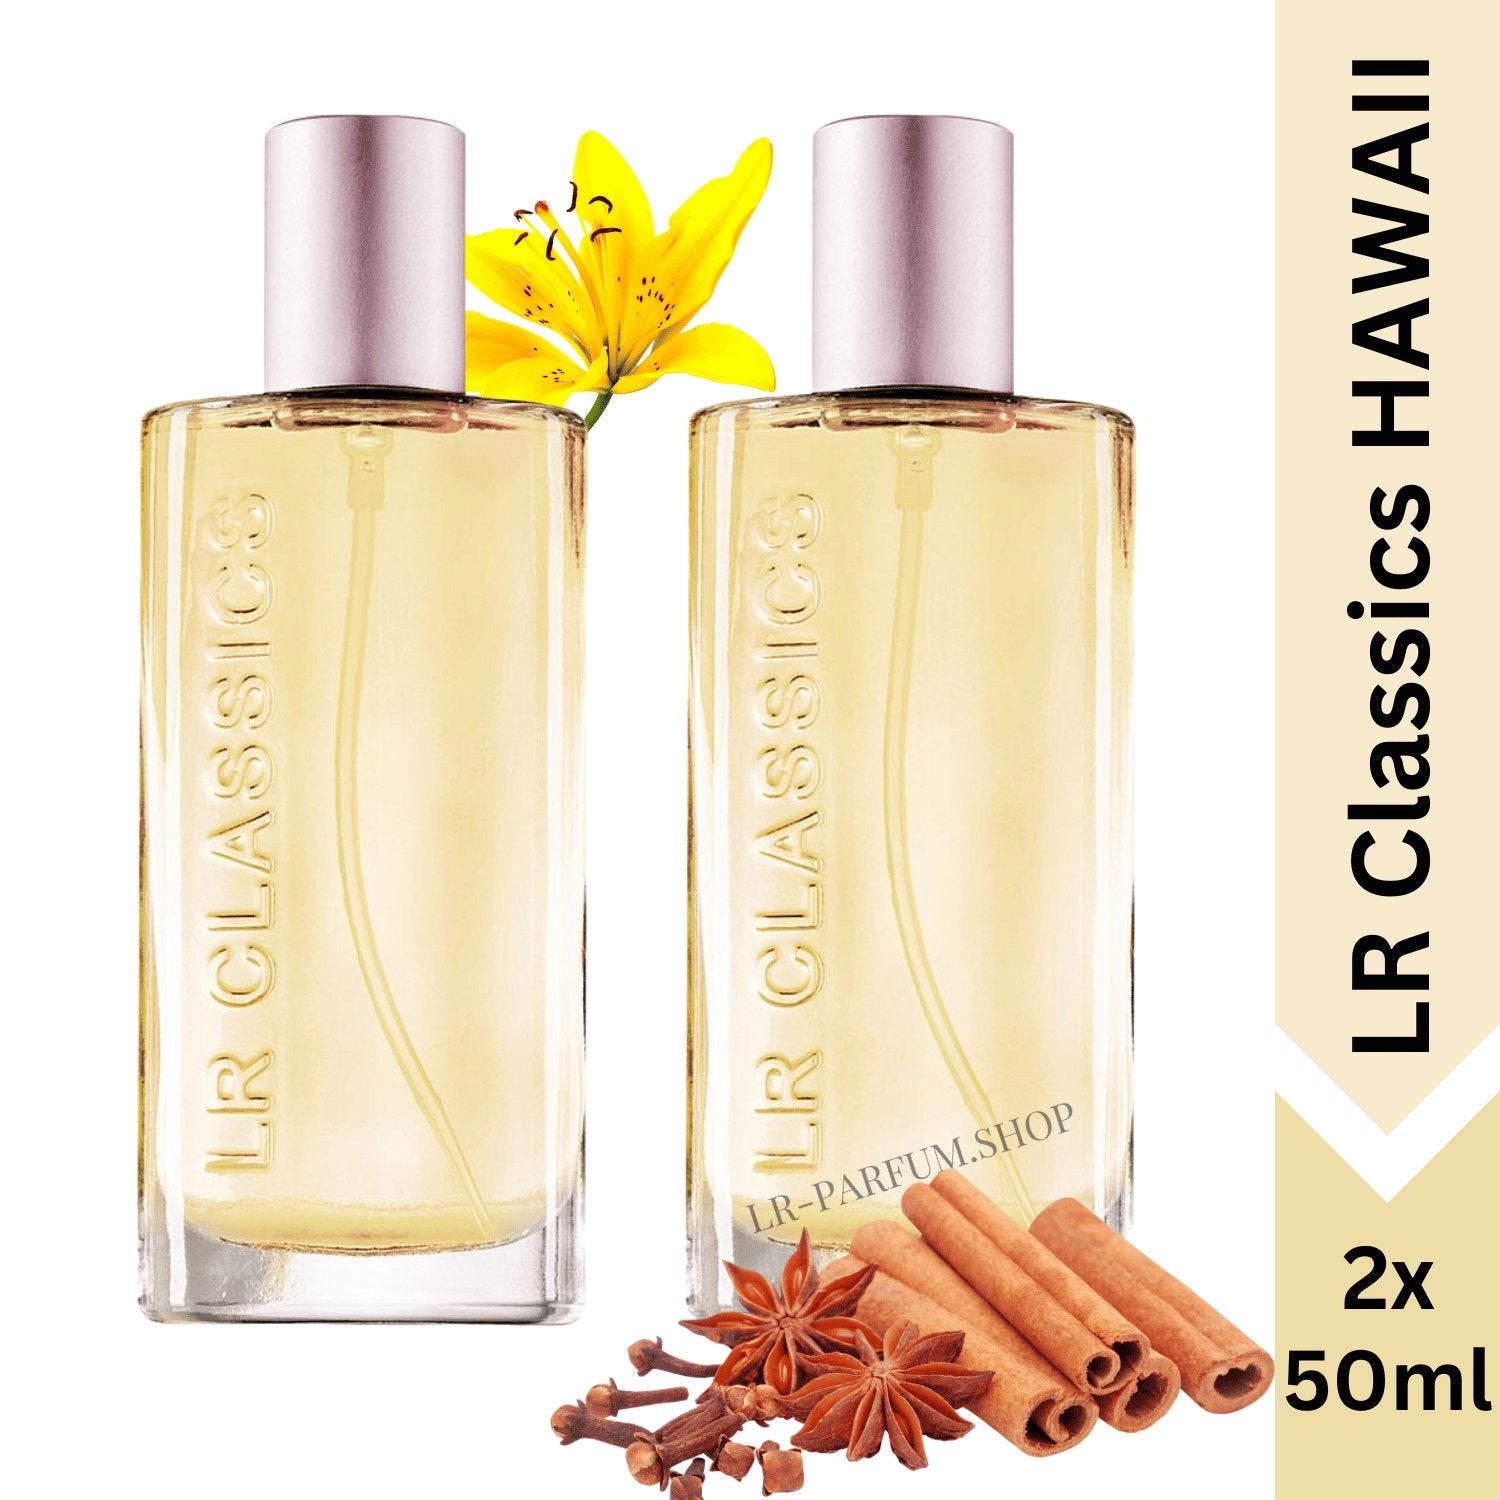 LR Classics Hawaii - Eau de Parfum, 2er Pack (2x50ml) - LR-Parfum.shop